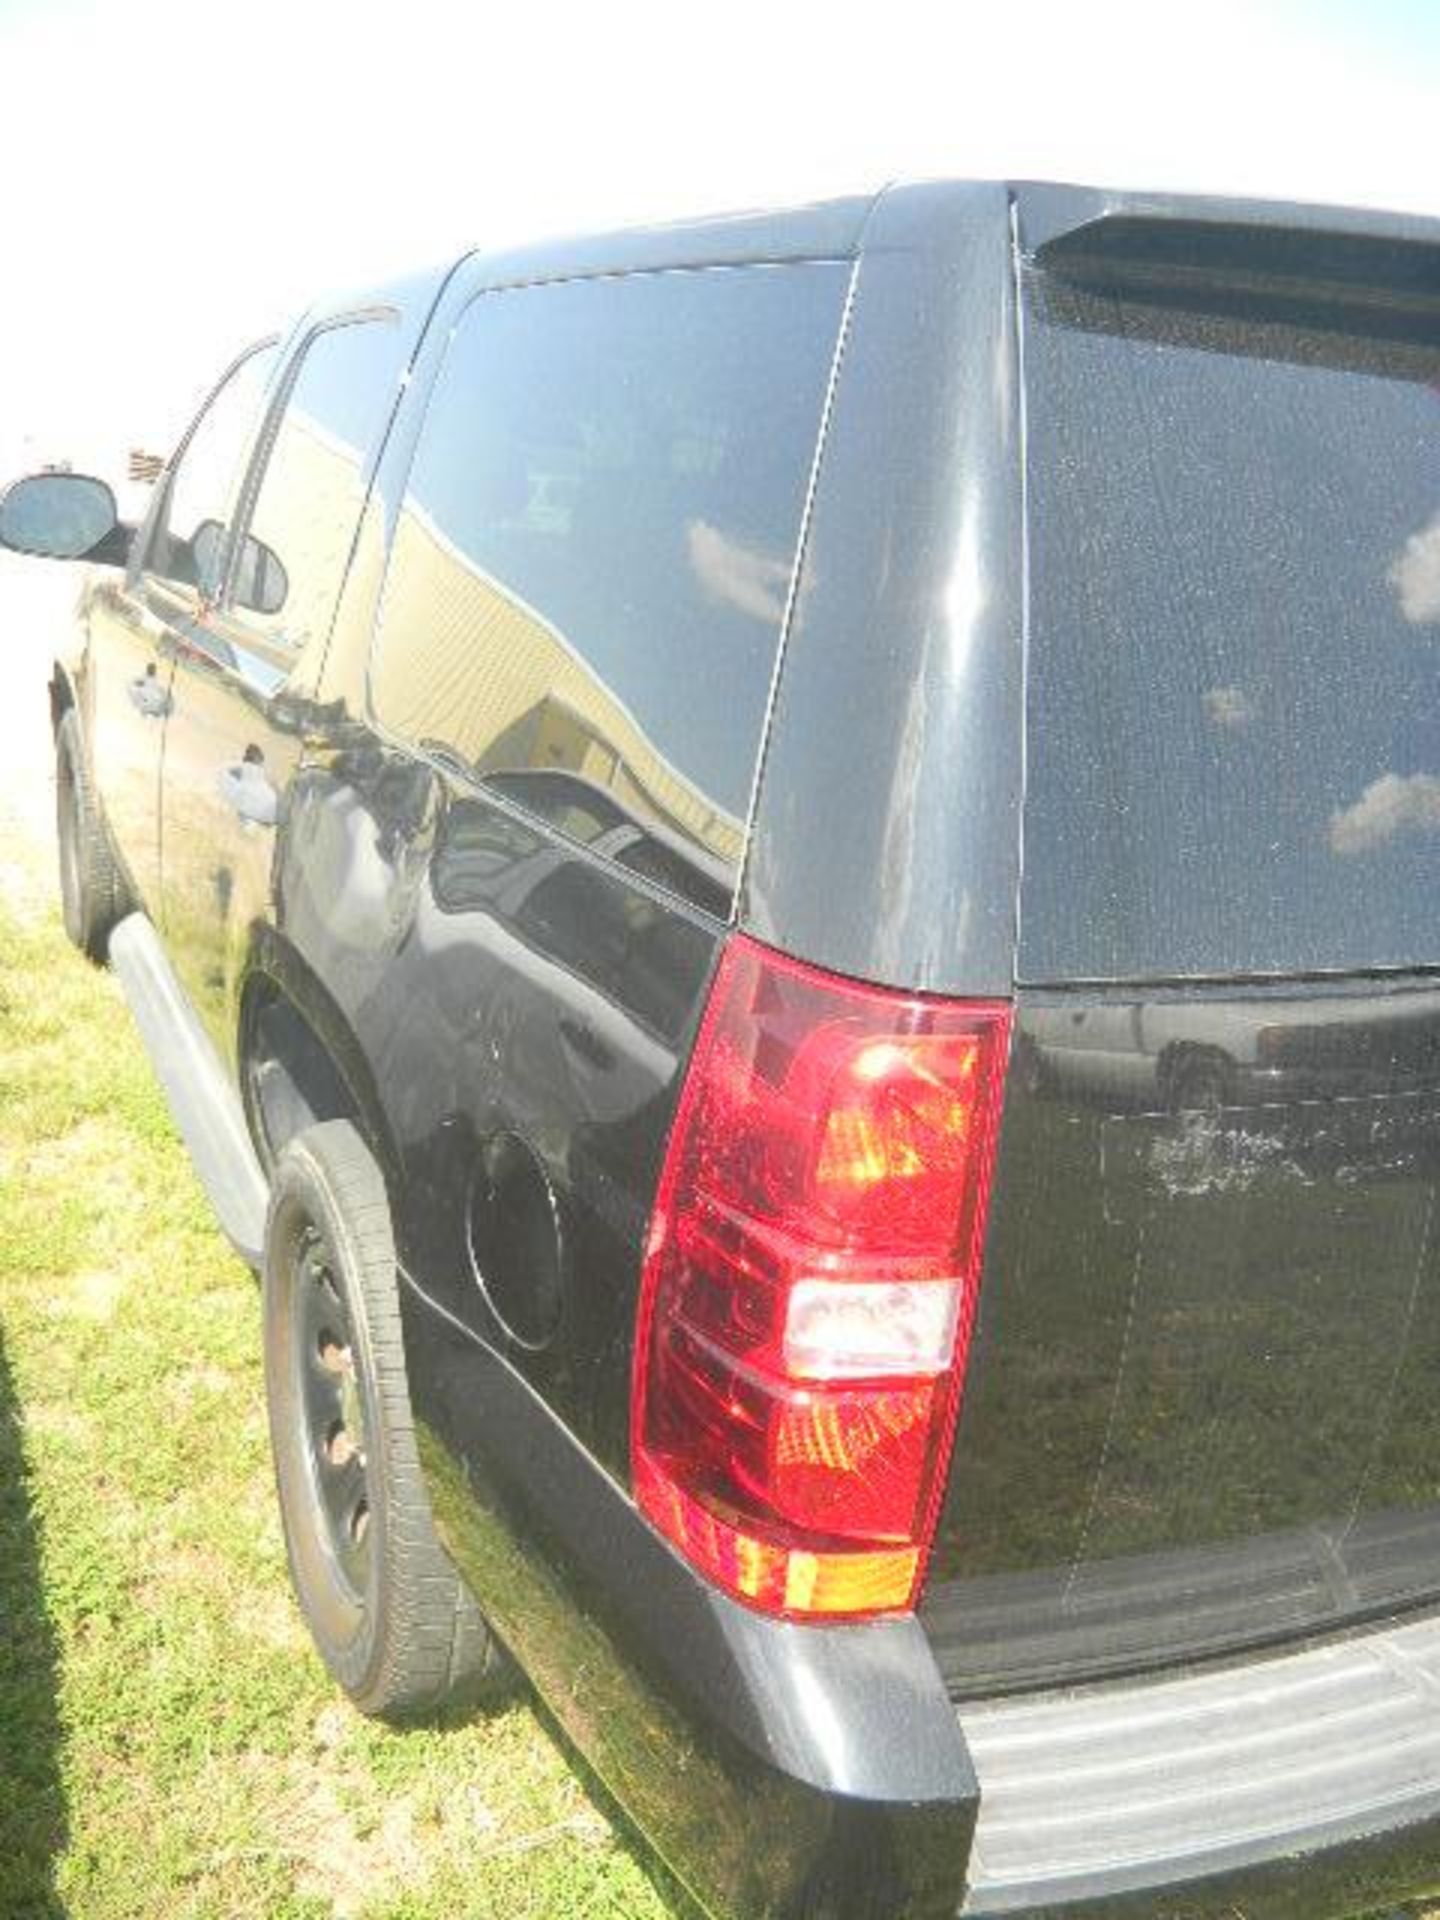 2010 Chevrolet Tahoe SUV Patrol Car - Asset I.D. #245 - Last of Vin (220645) - Image 3 of 7